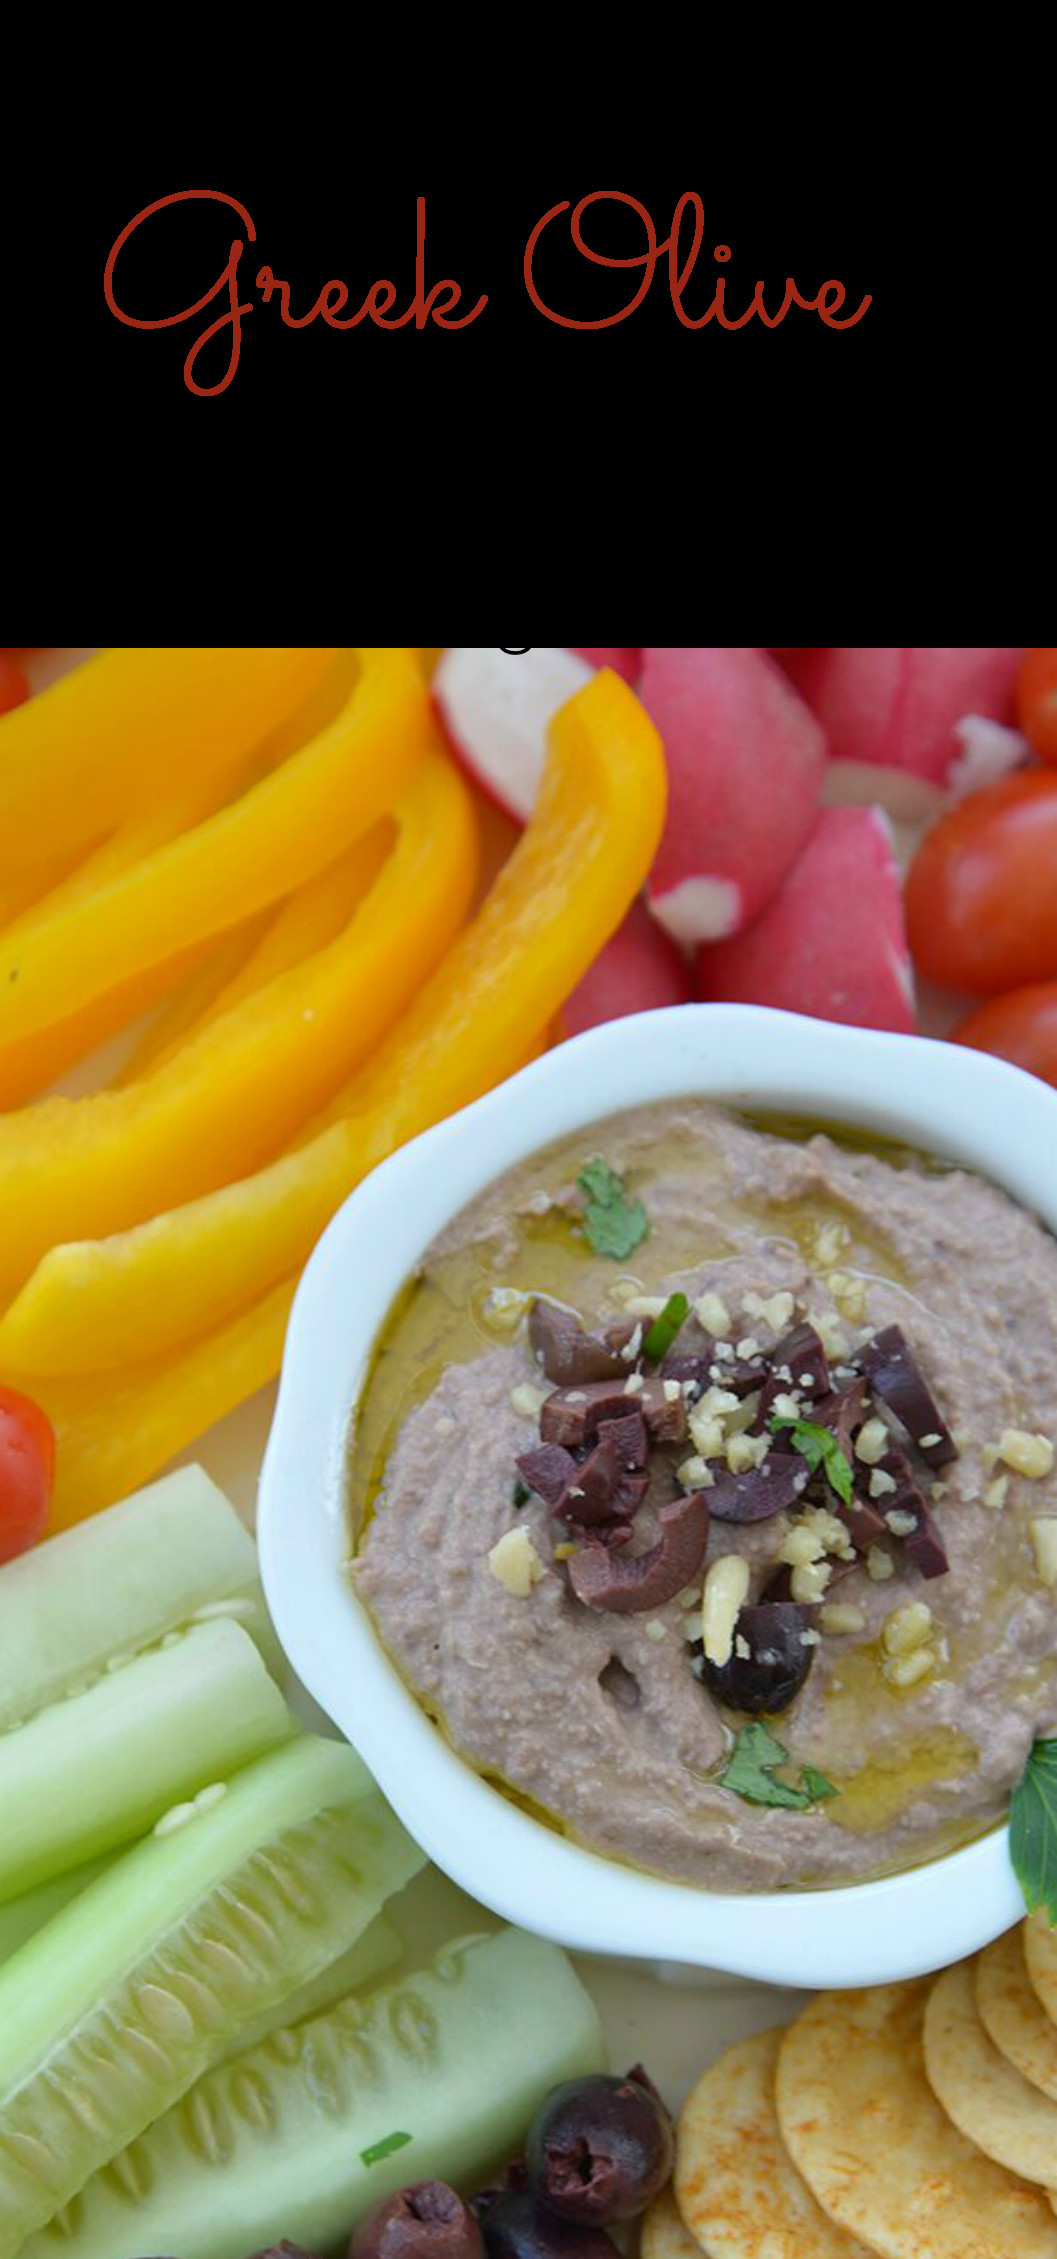 Gluten Free Appetizers To Buy
 Kalamata Hummus Recipe